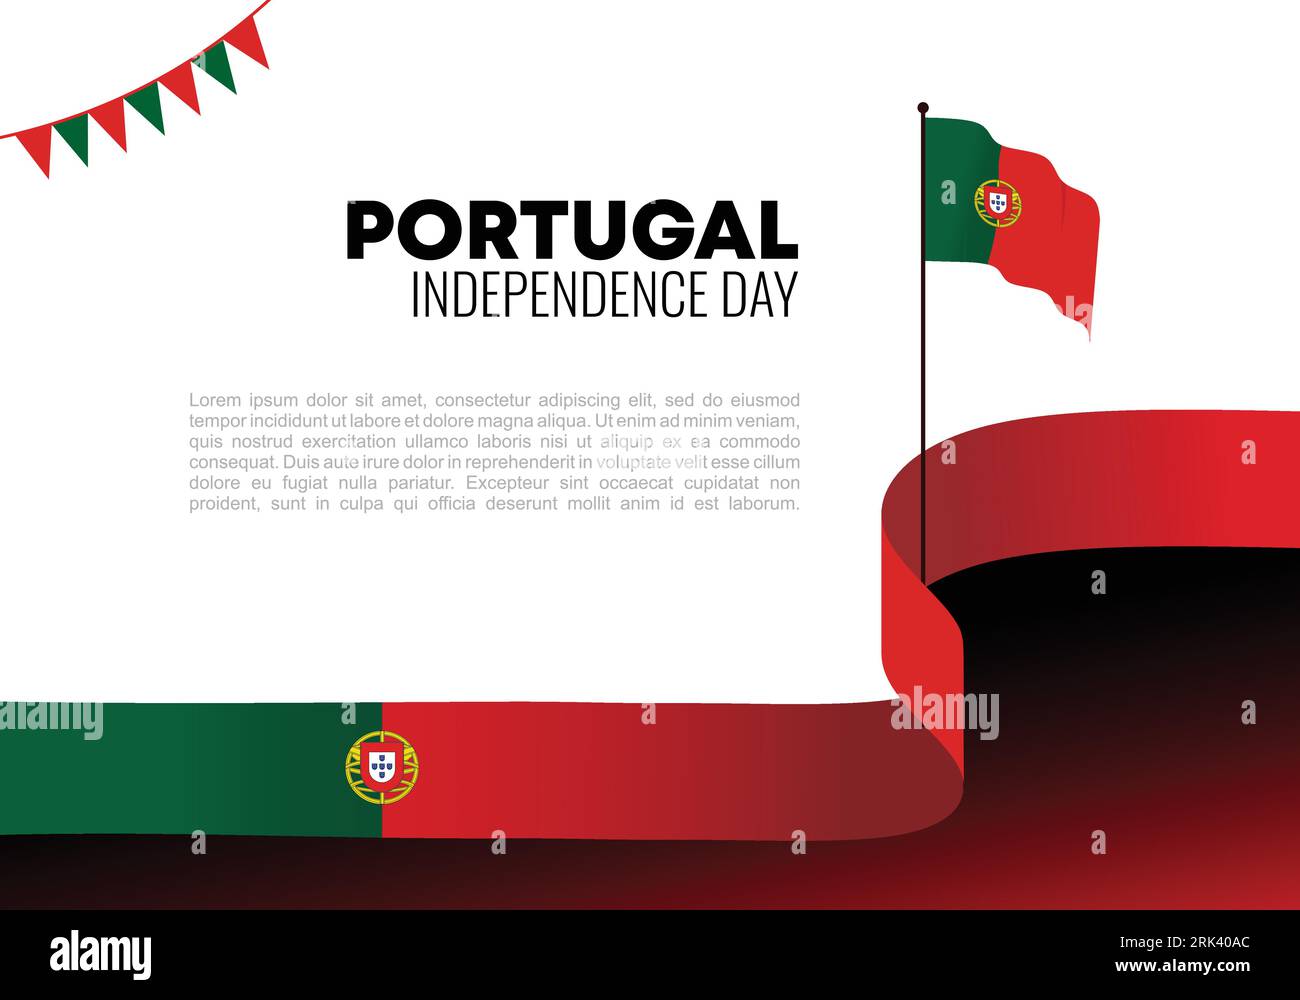 Portugal independence day background banner poster for national celebration on December 1 st. Stock Vector